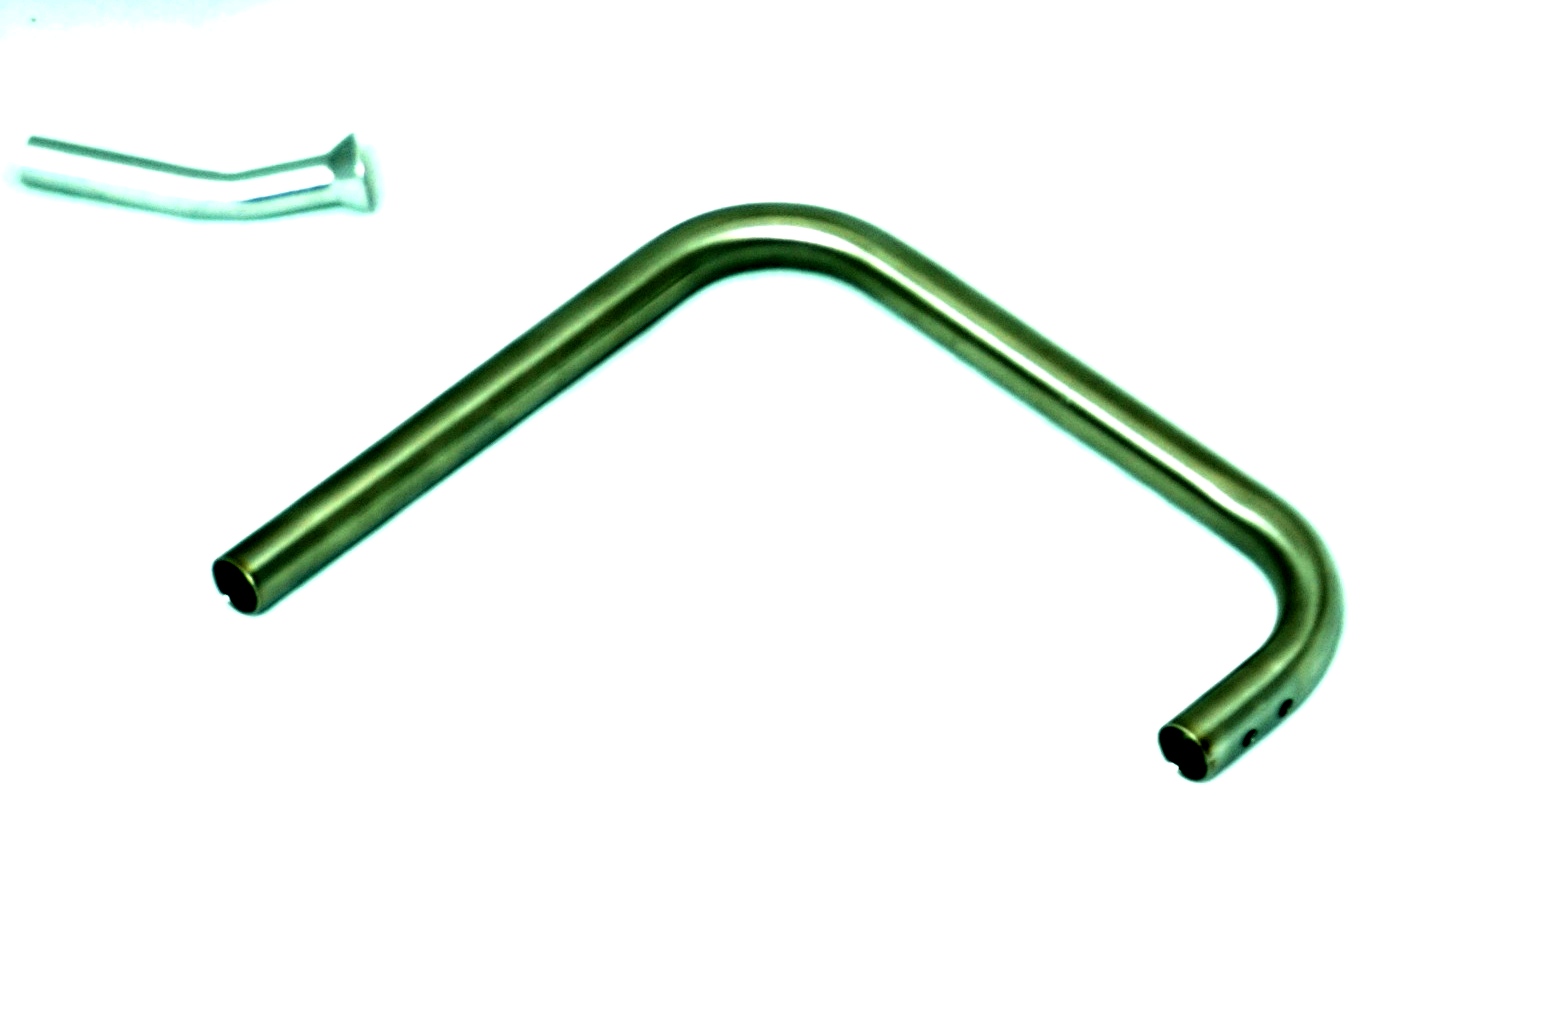 Bent electrical conduit and raceway tubing